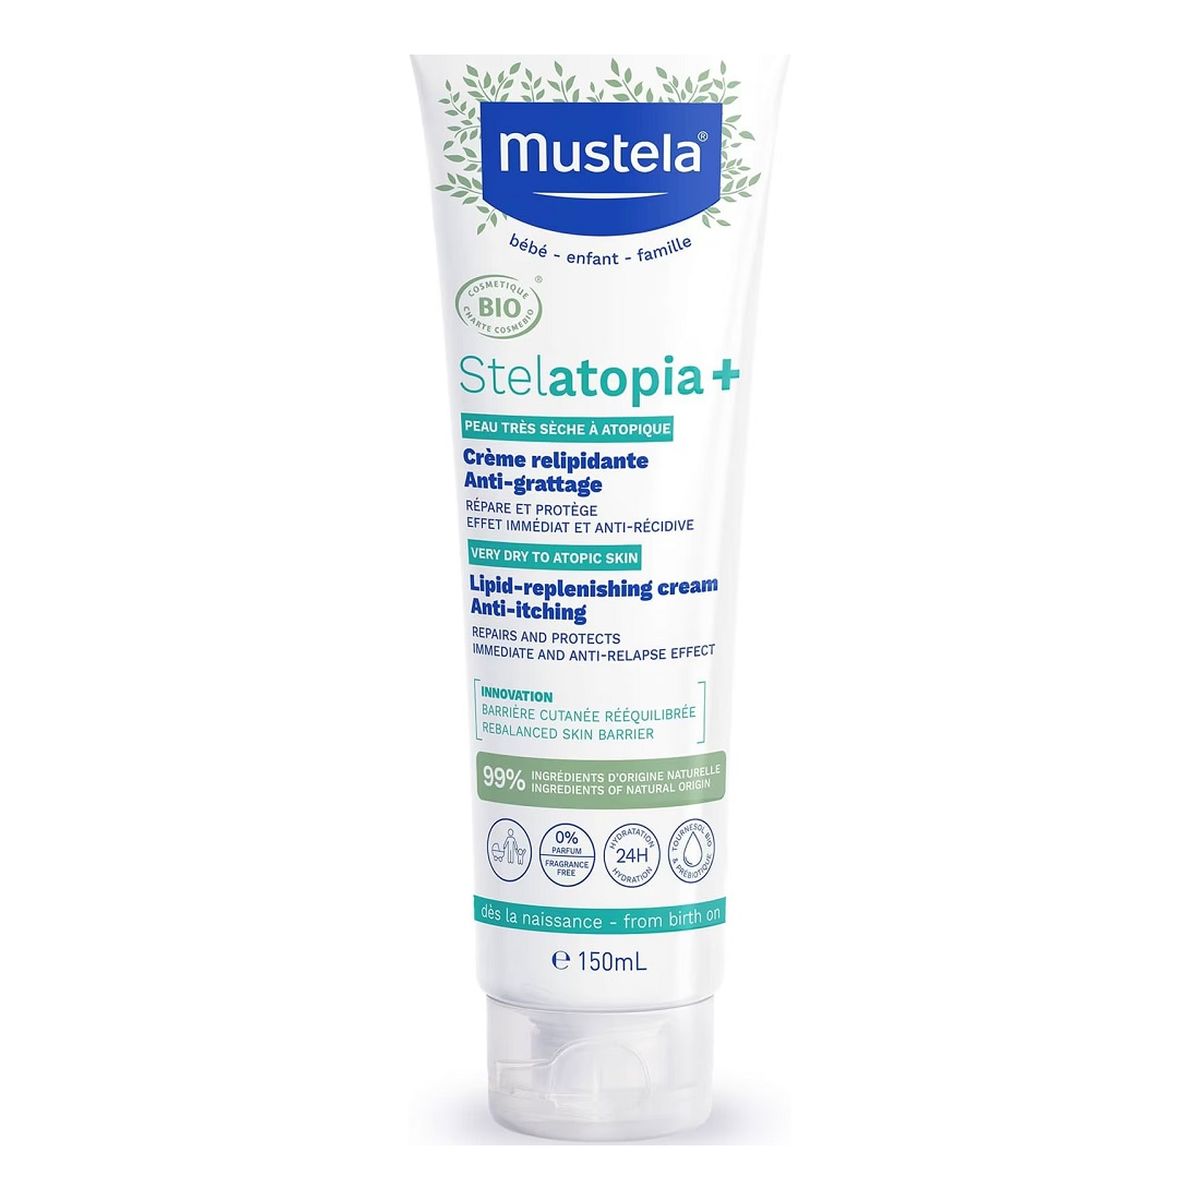 Mustela Stelatopia+ Lipid-Replenishing Cream Krem uzupełniający lipidy 150ml